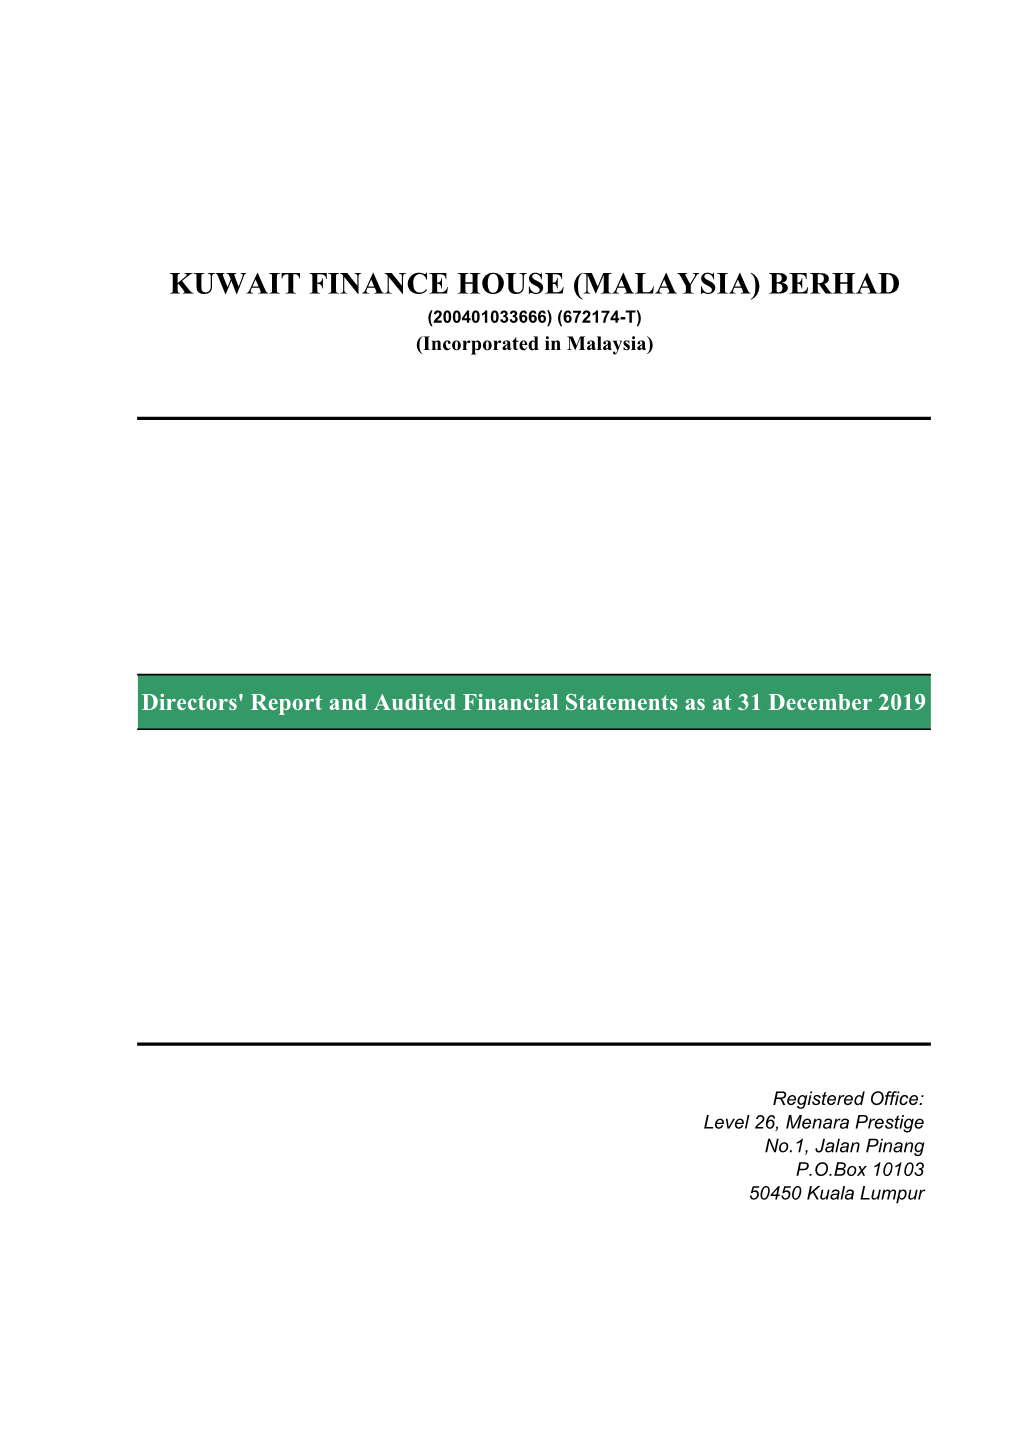 KUWAIT FINANCE HOUSE (MALAYSIA) BERHAD (200401033666) (672174-T) (Incorporated in Malaysia)